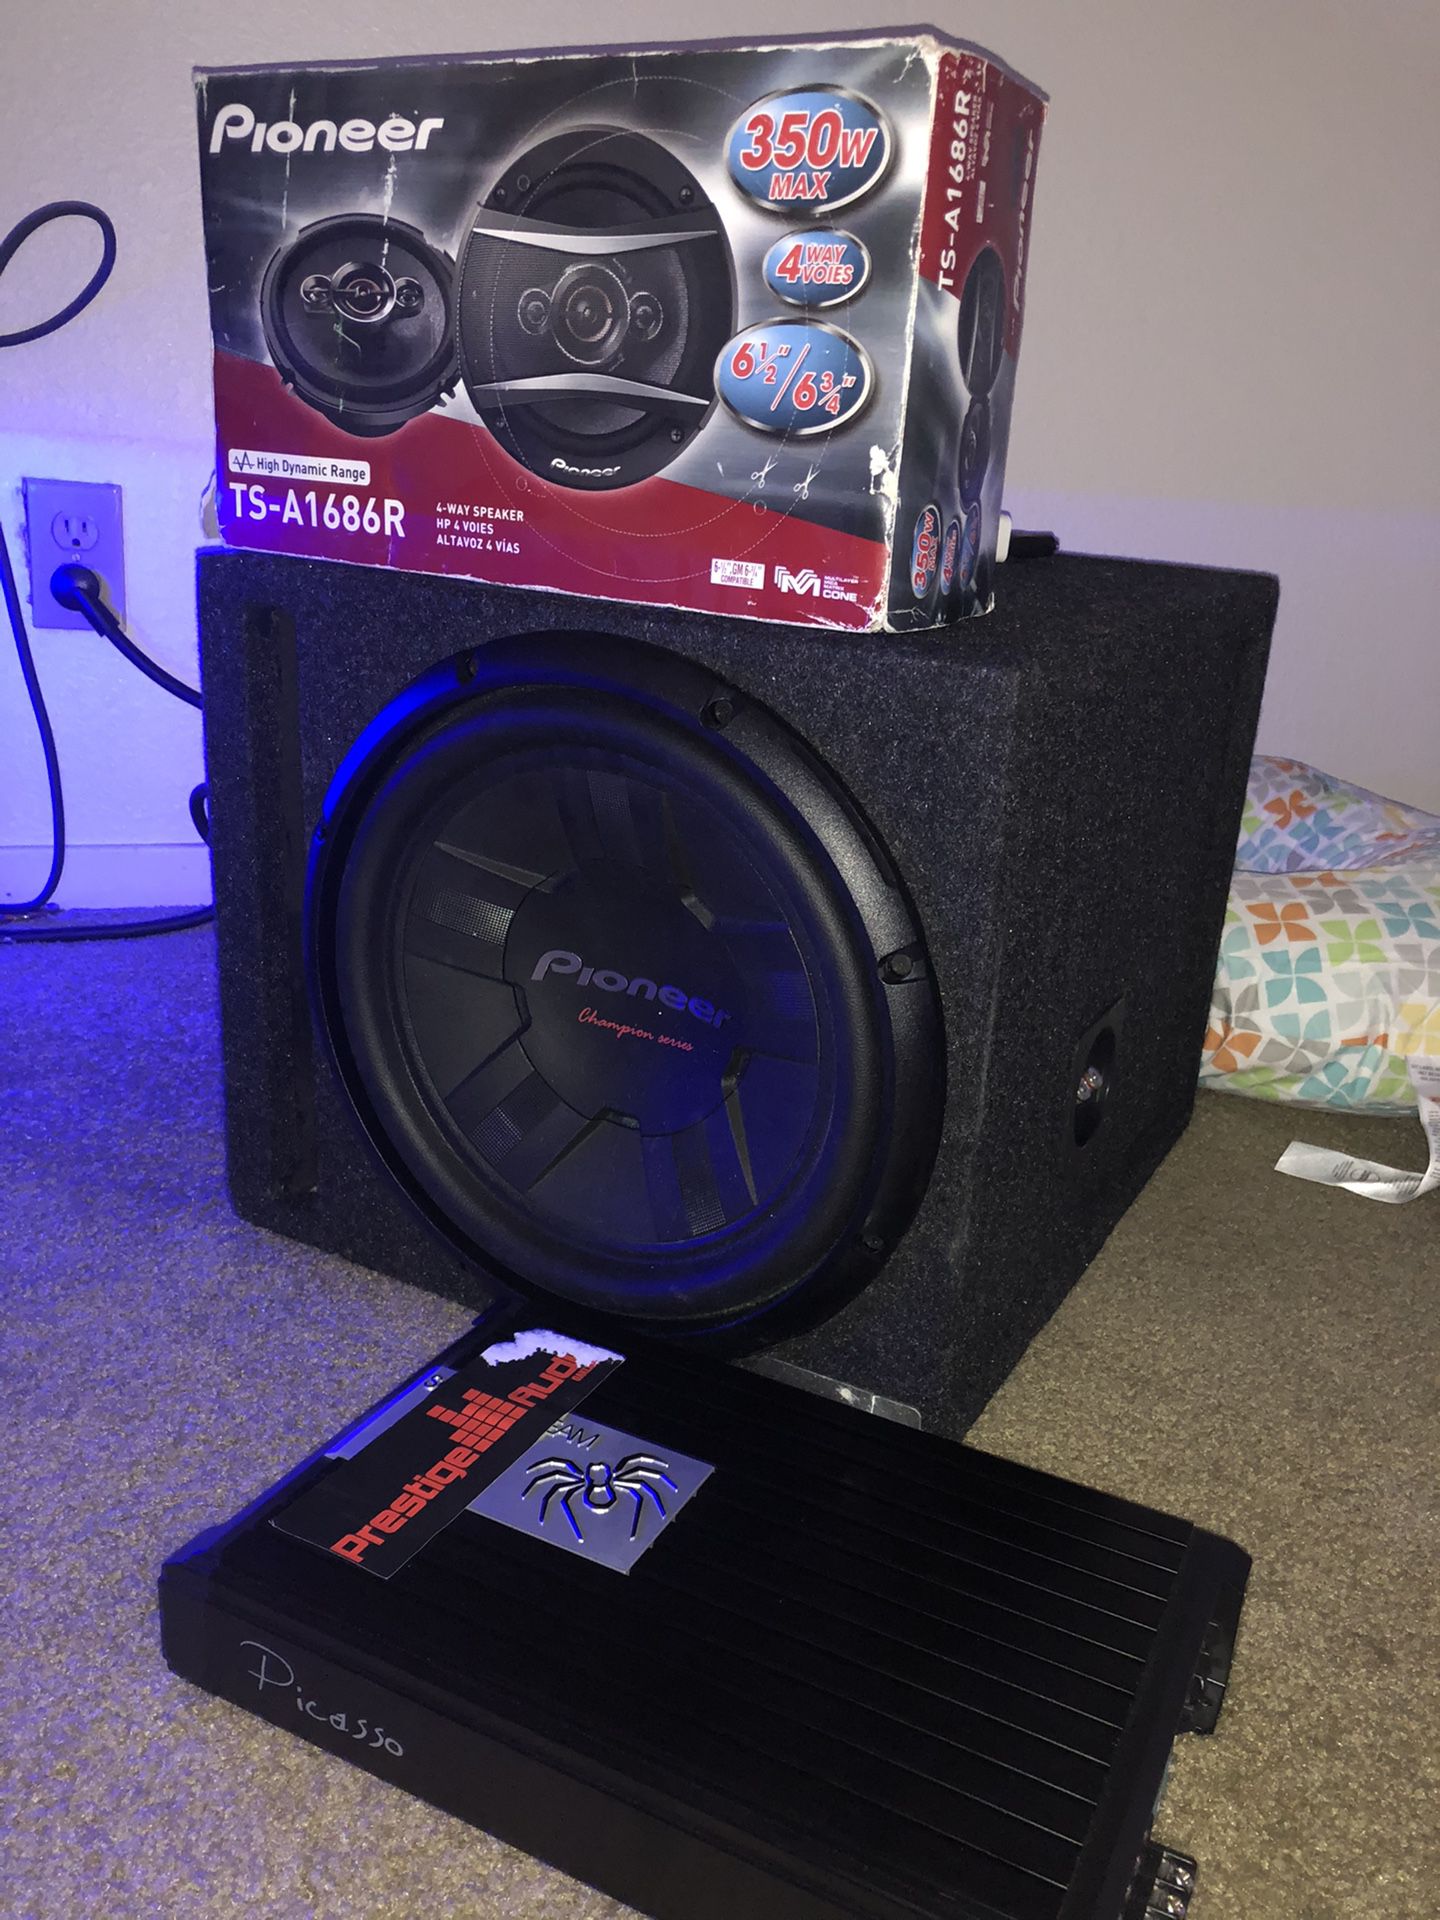 12” pioneer sub with box, Sound Stream 1000wat amp, 6 1/2” 4way speakers